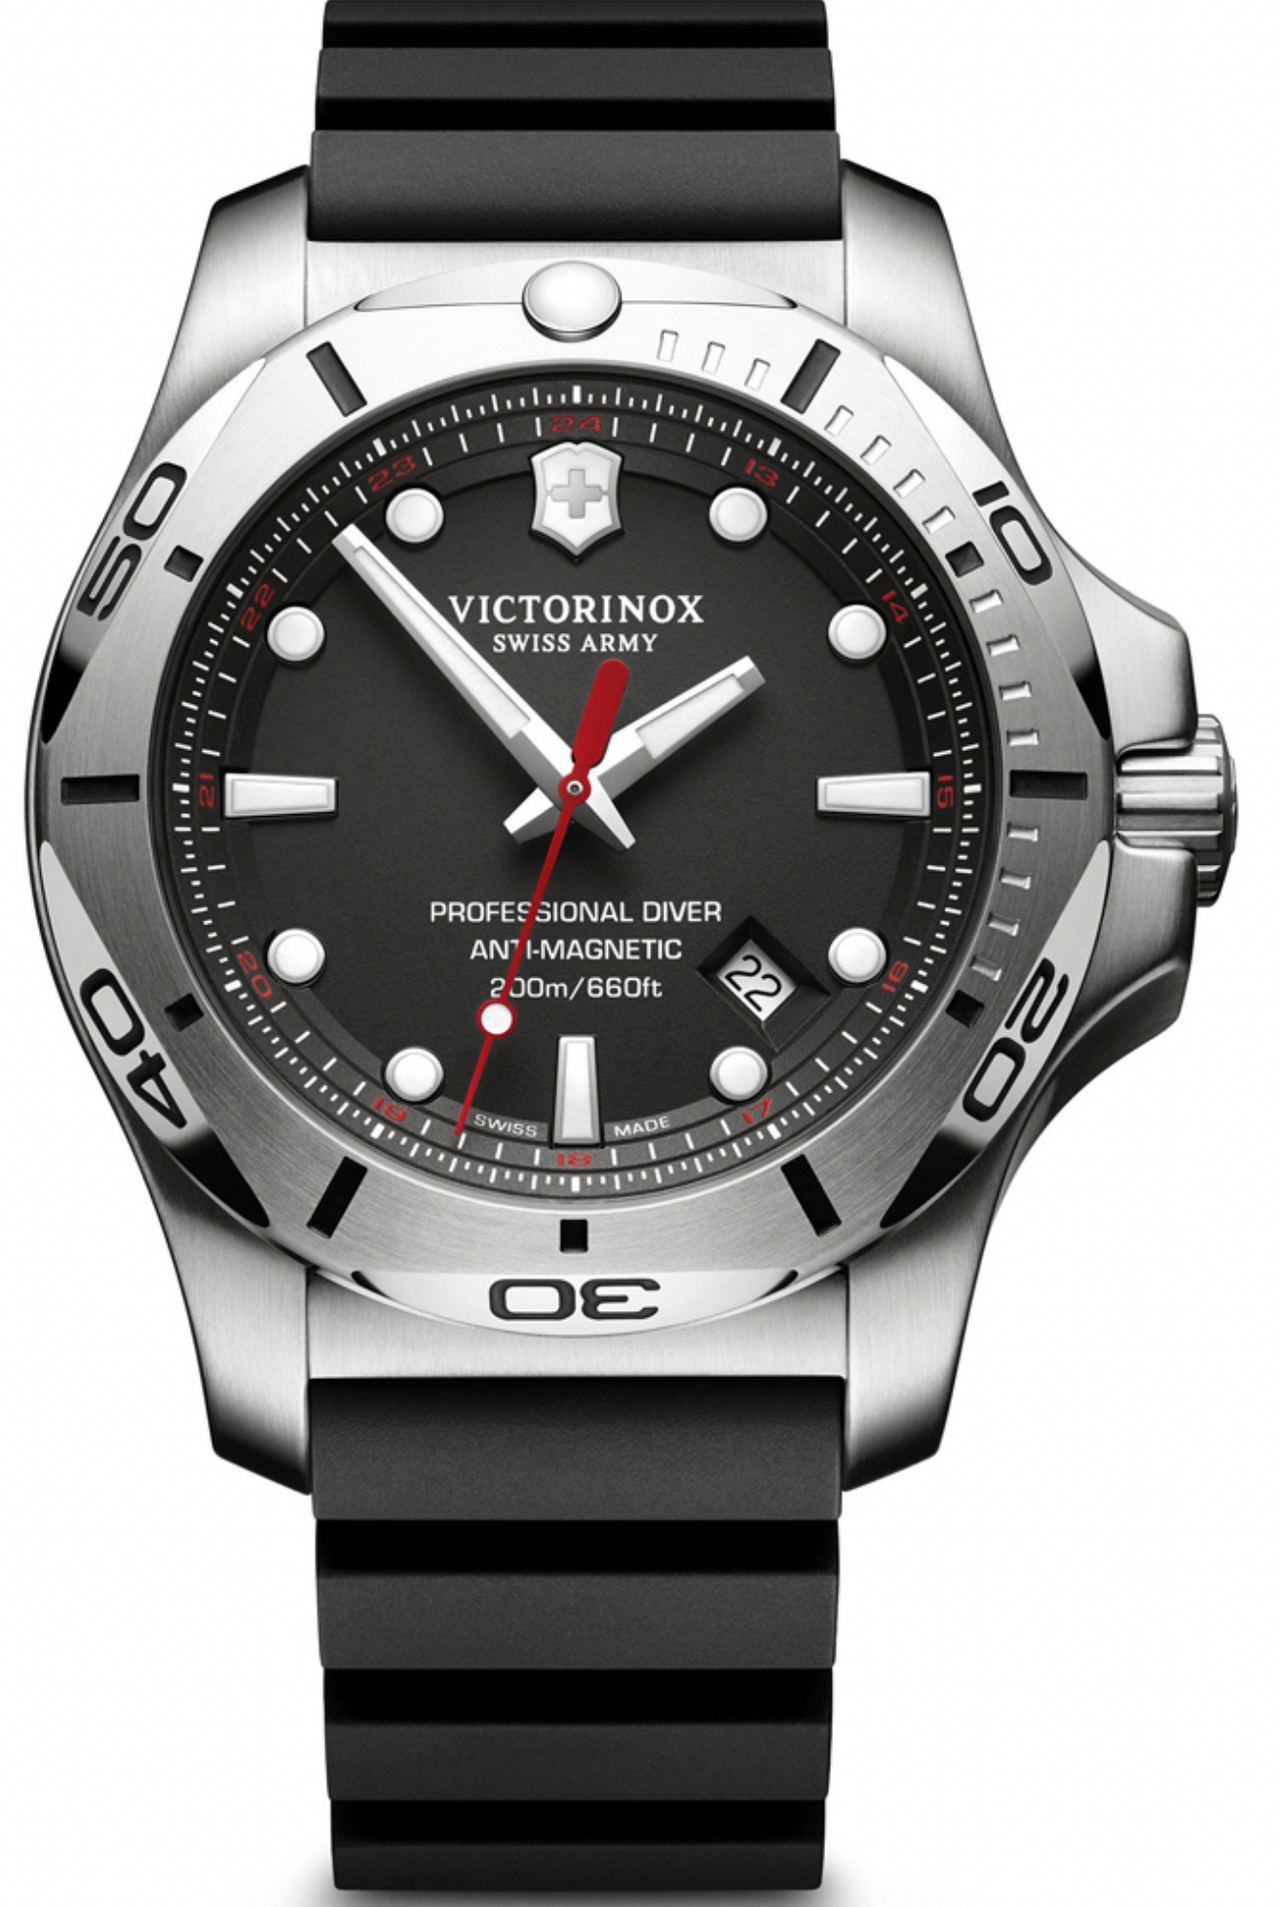 Victorinox Men's Watch I.N.O.X. Professional Diver Black 241733